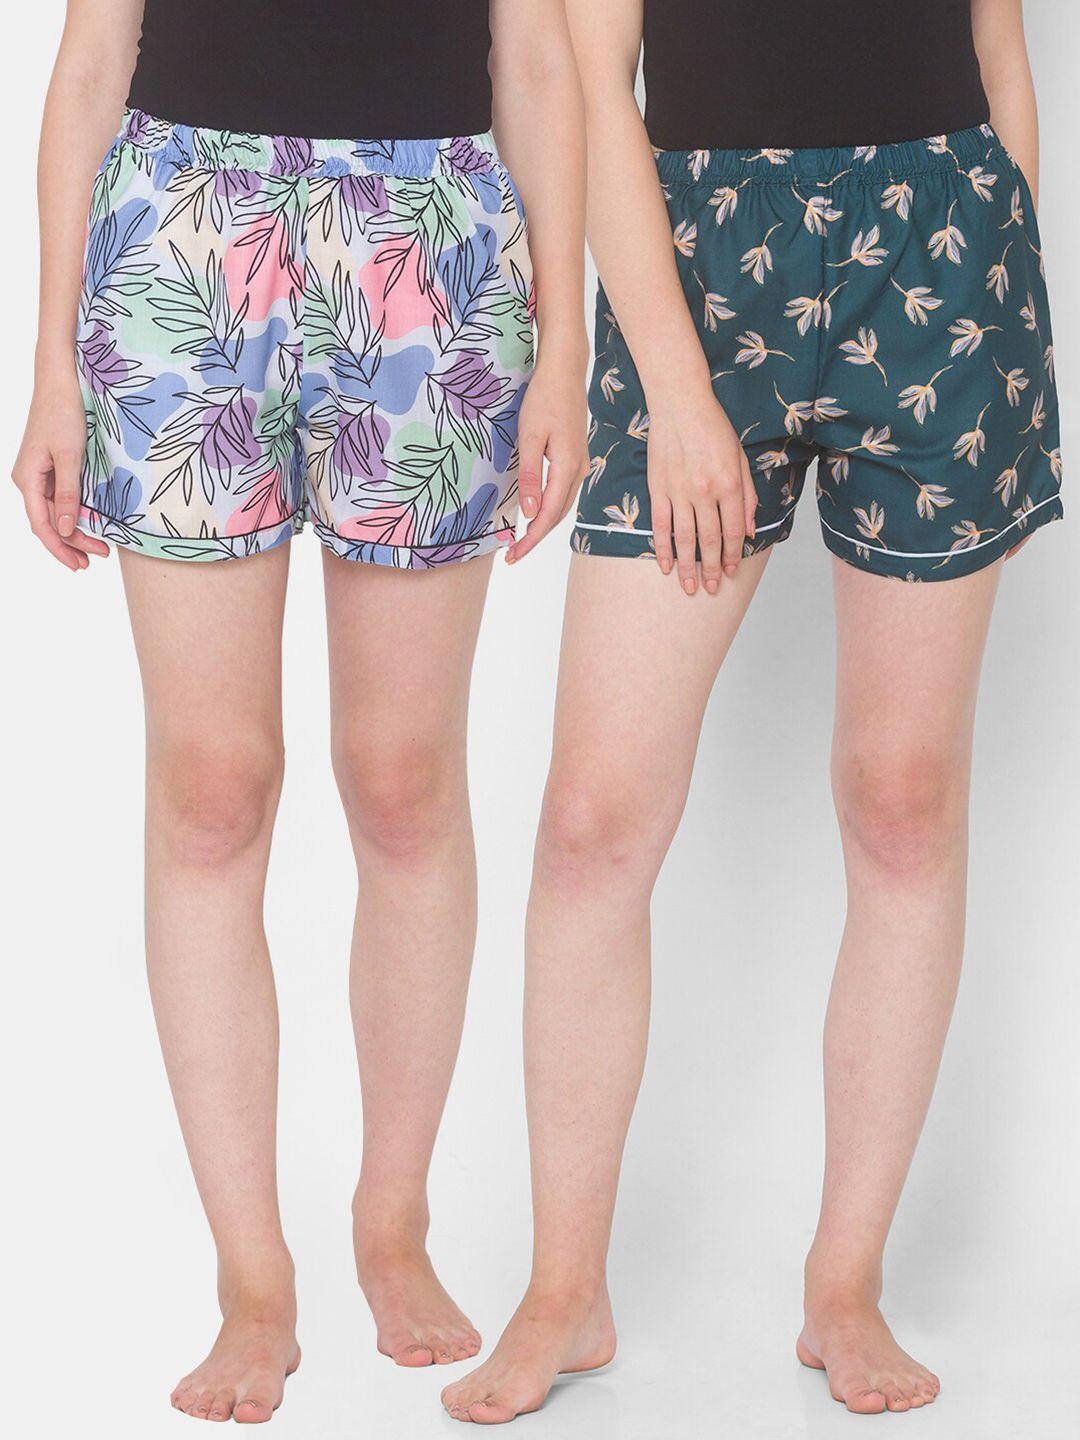 fashionrack women pack of 2 printed cotton lounge shorts